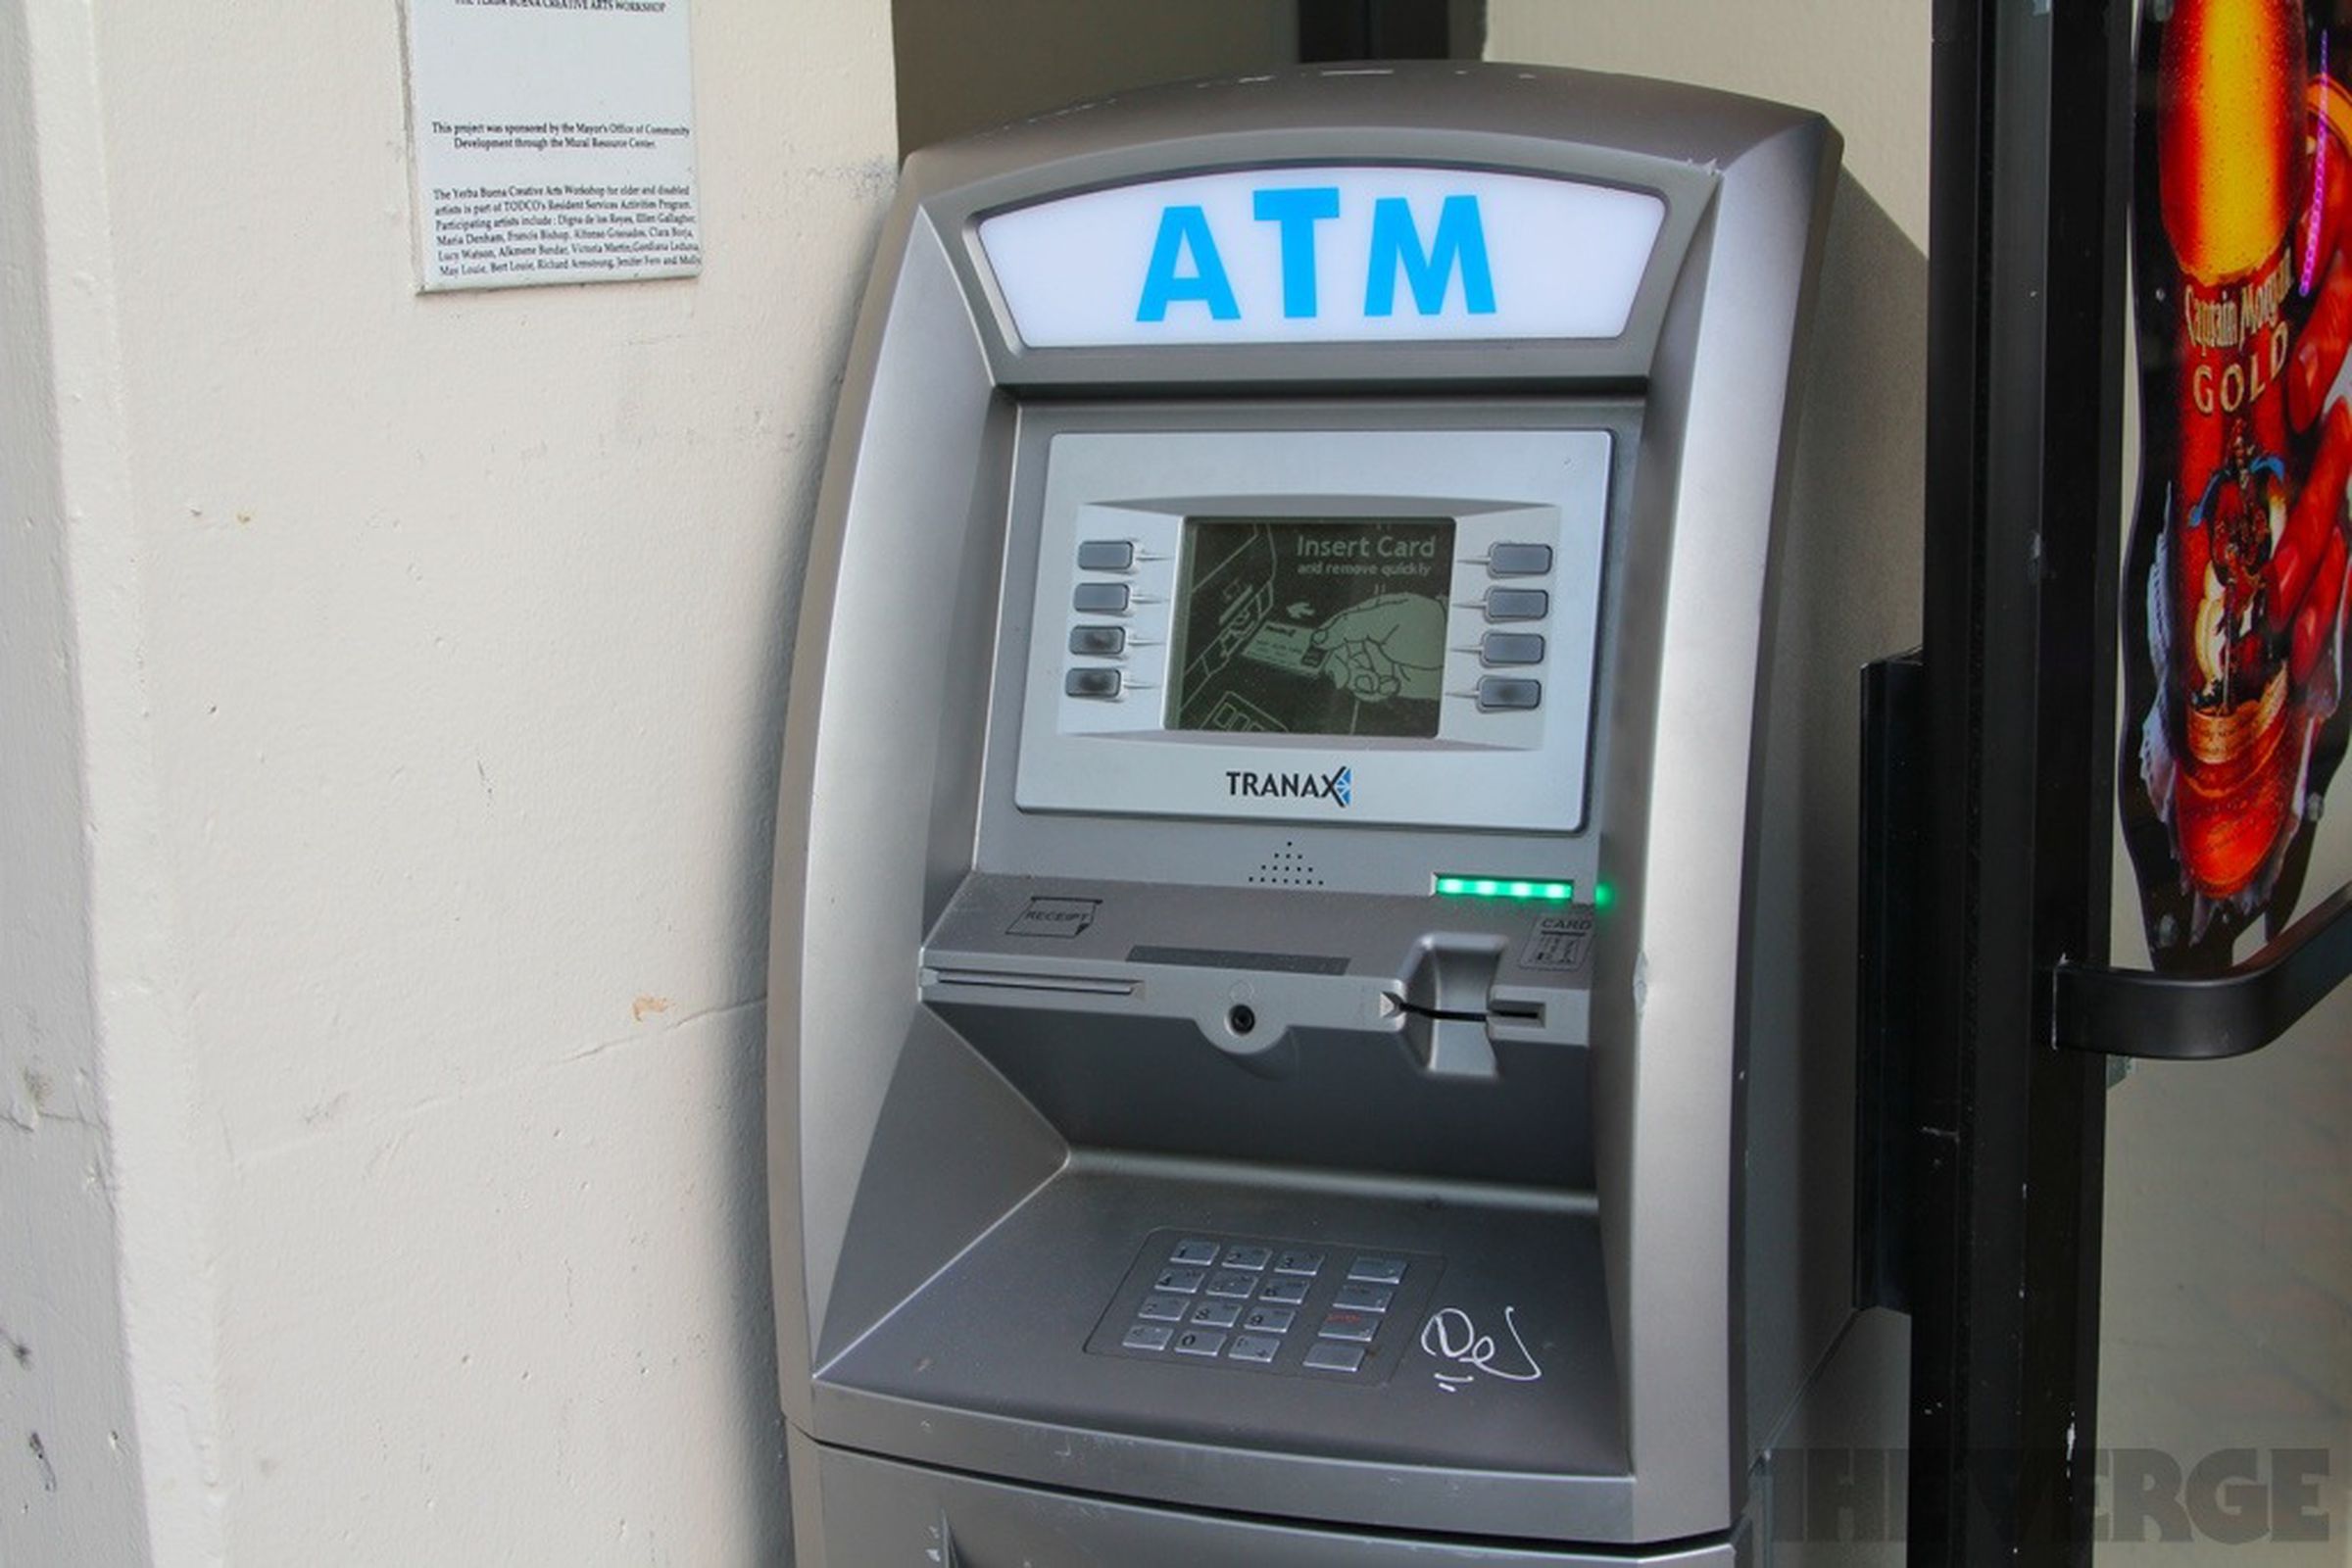 shady ATM cash stock 1024